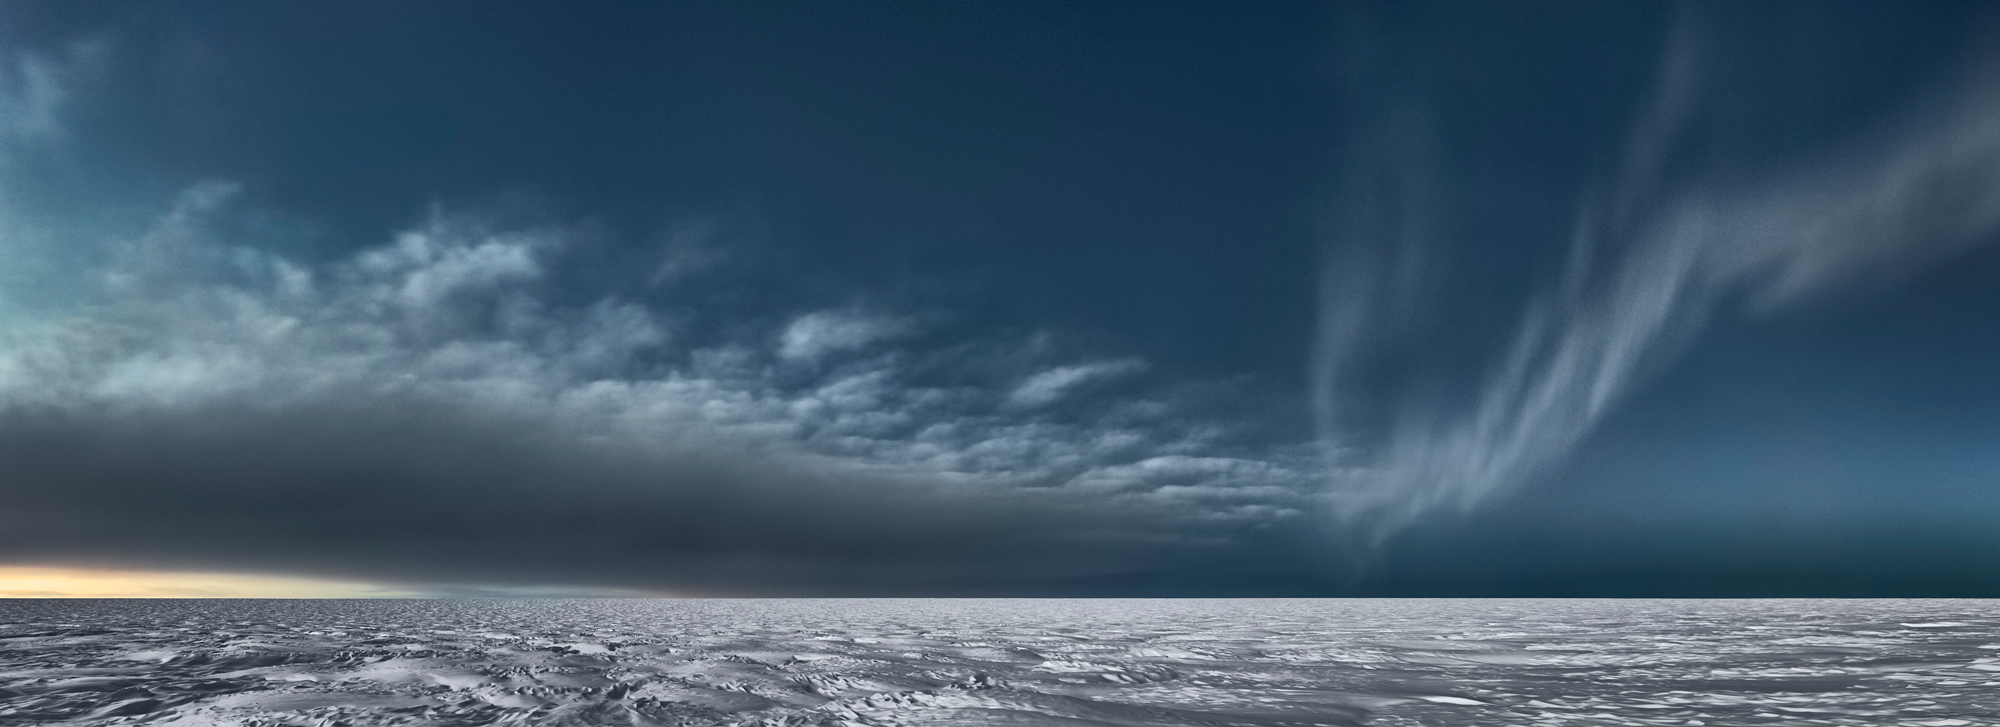 Icesheet #3373 cloud bank & aurora, 95cm x 261cm, Digital Pigment Print, Edition of 7, 2013